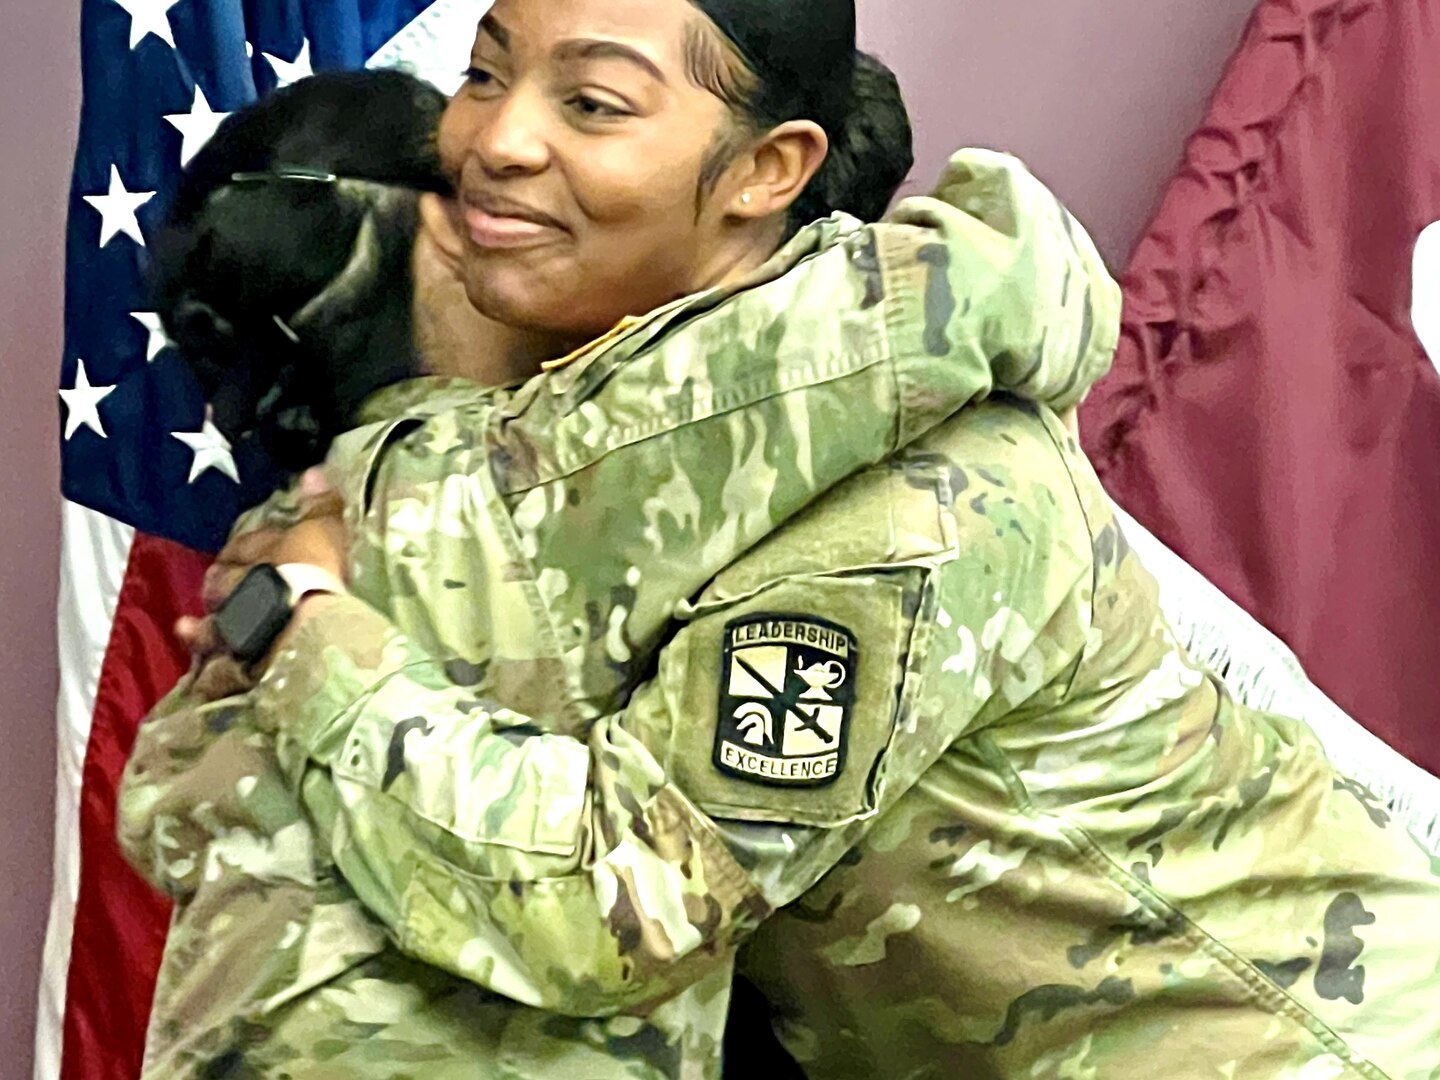 Deputy Commander congratulating nursing student with a hug.